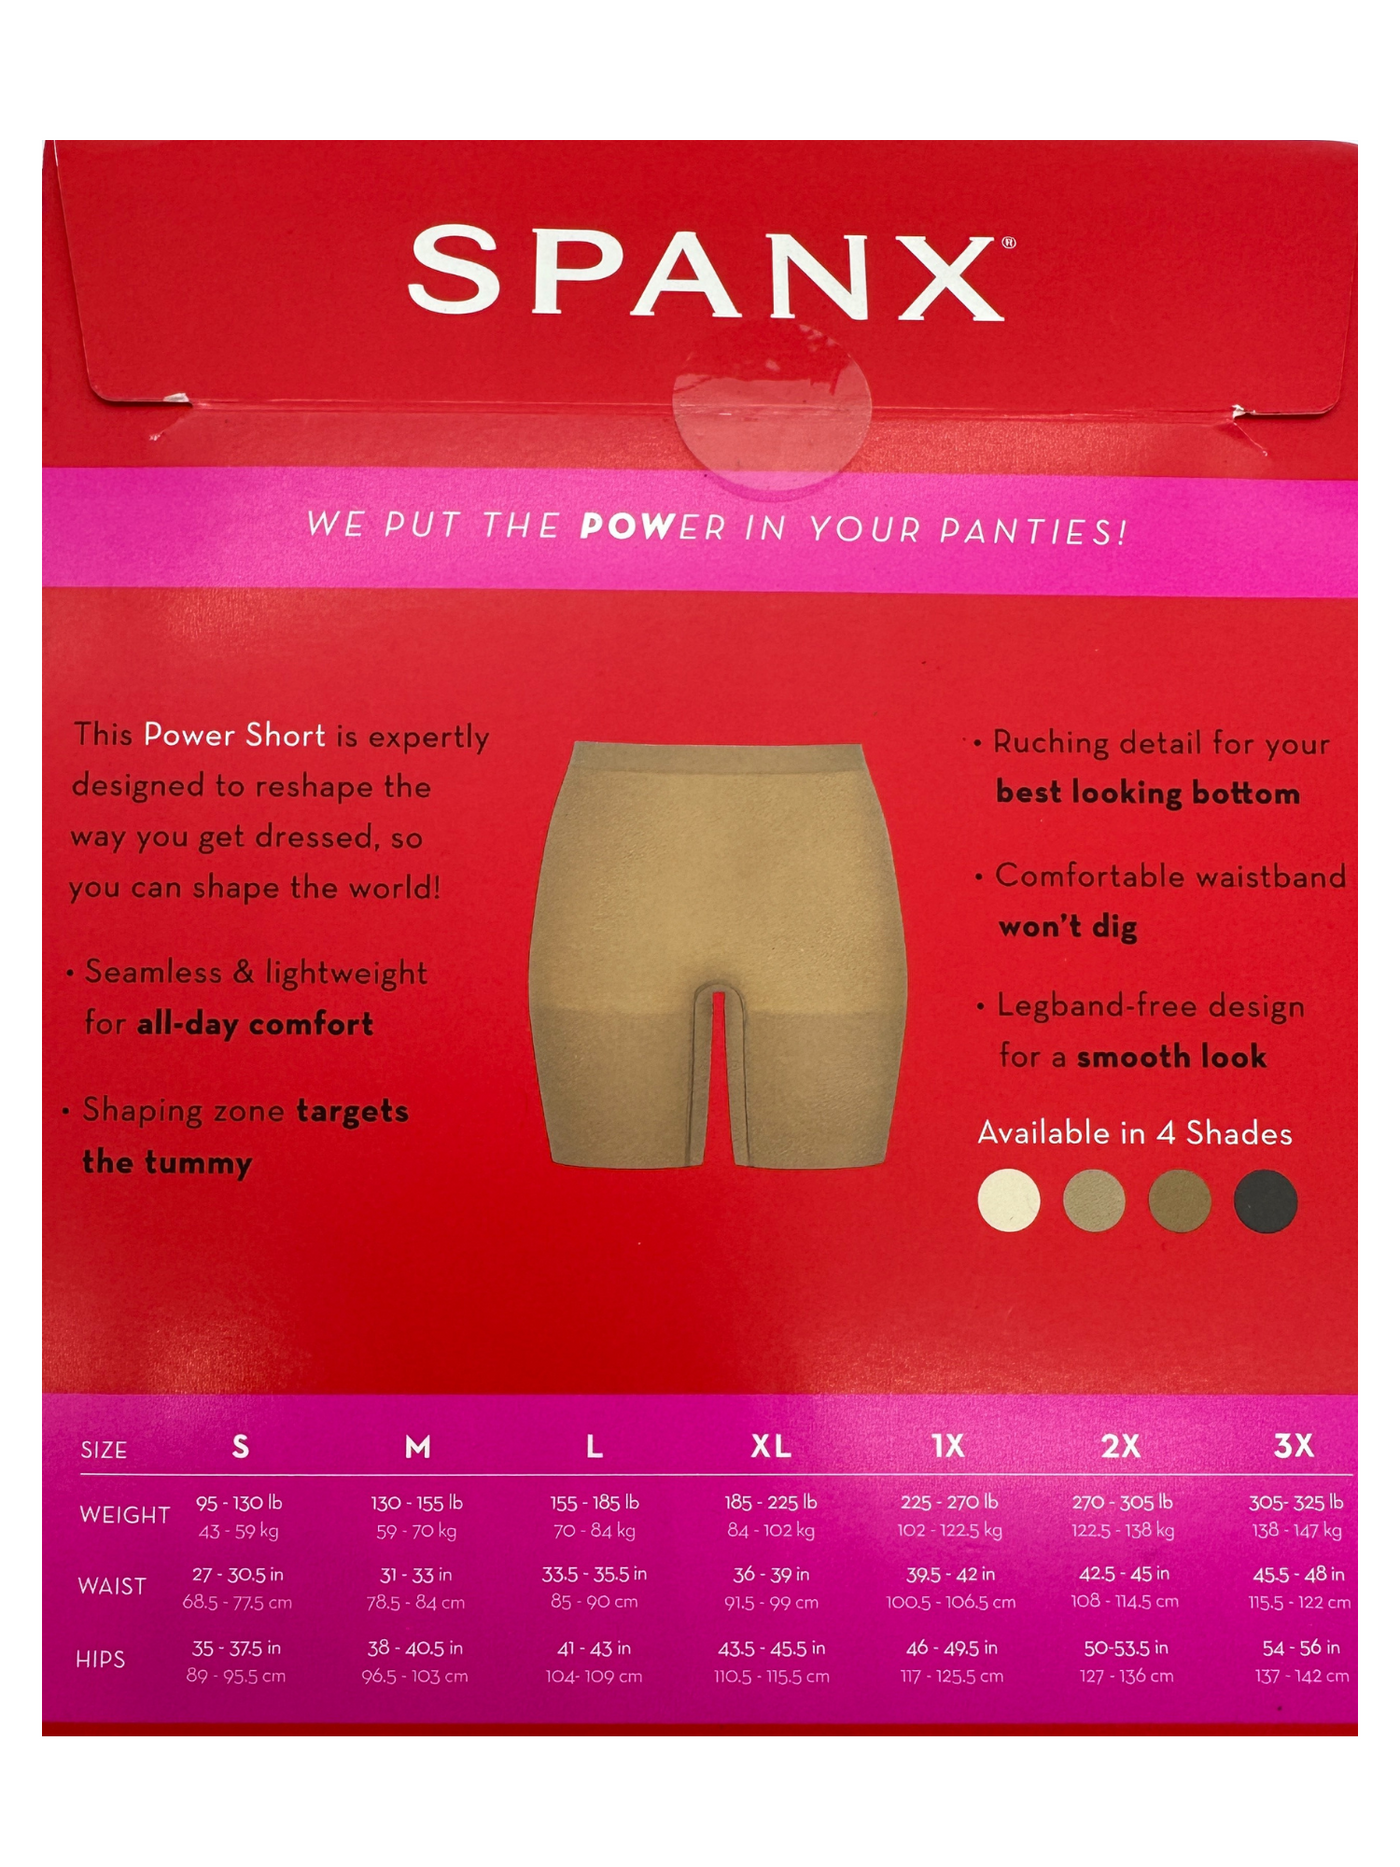 Spanx Power Short size chart